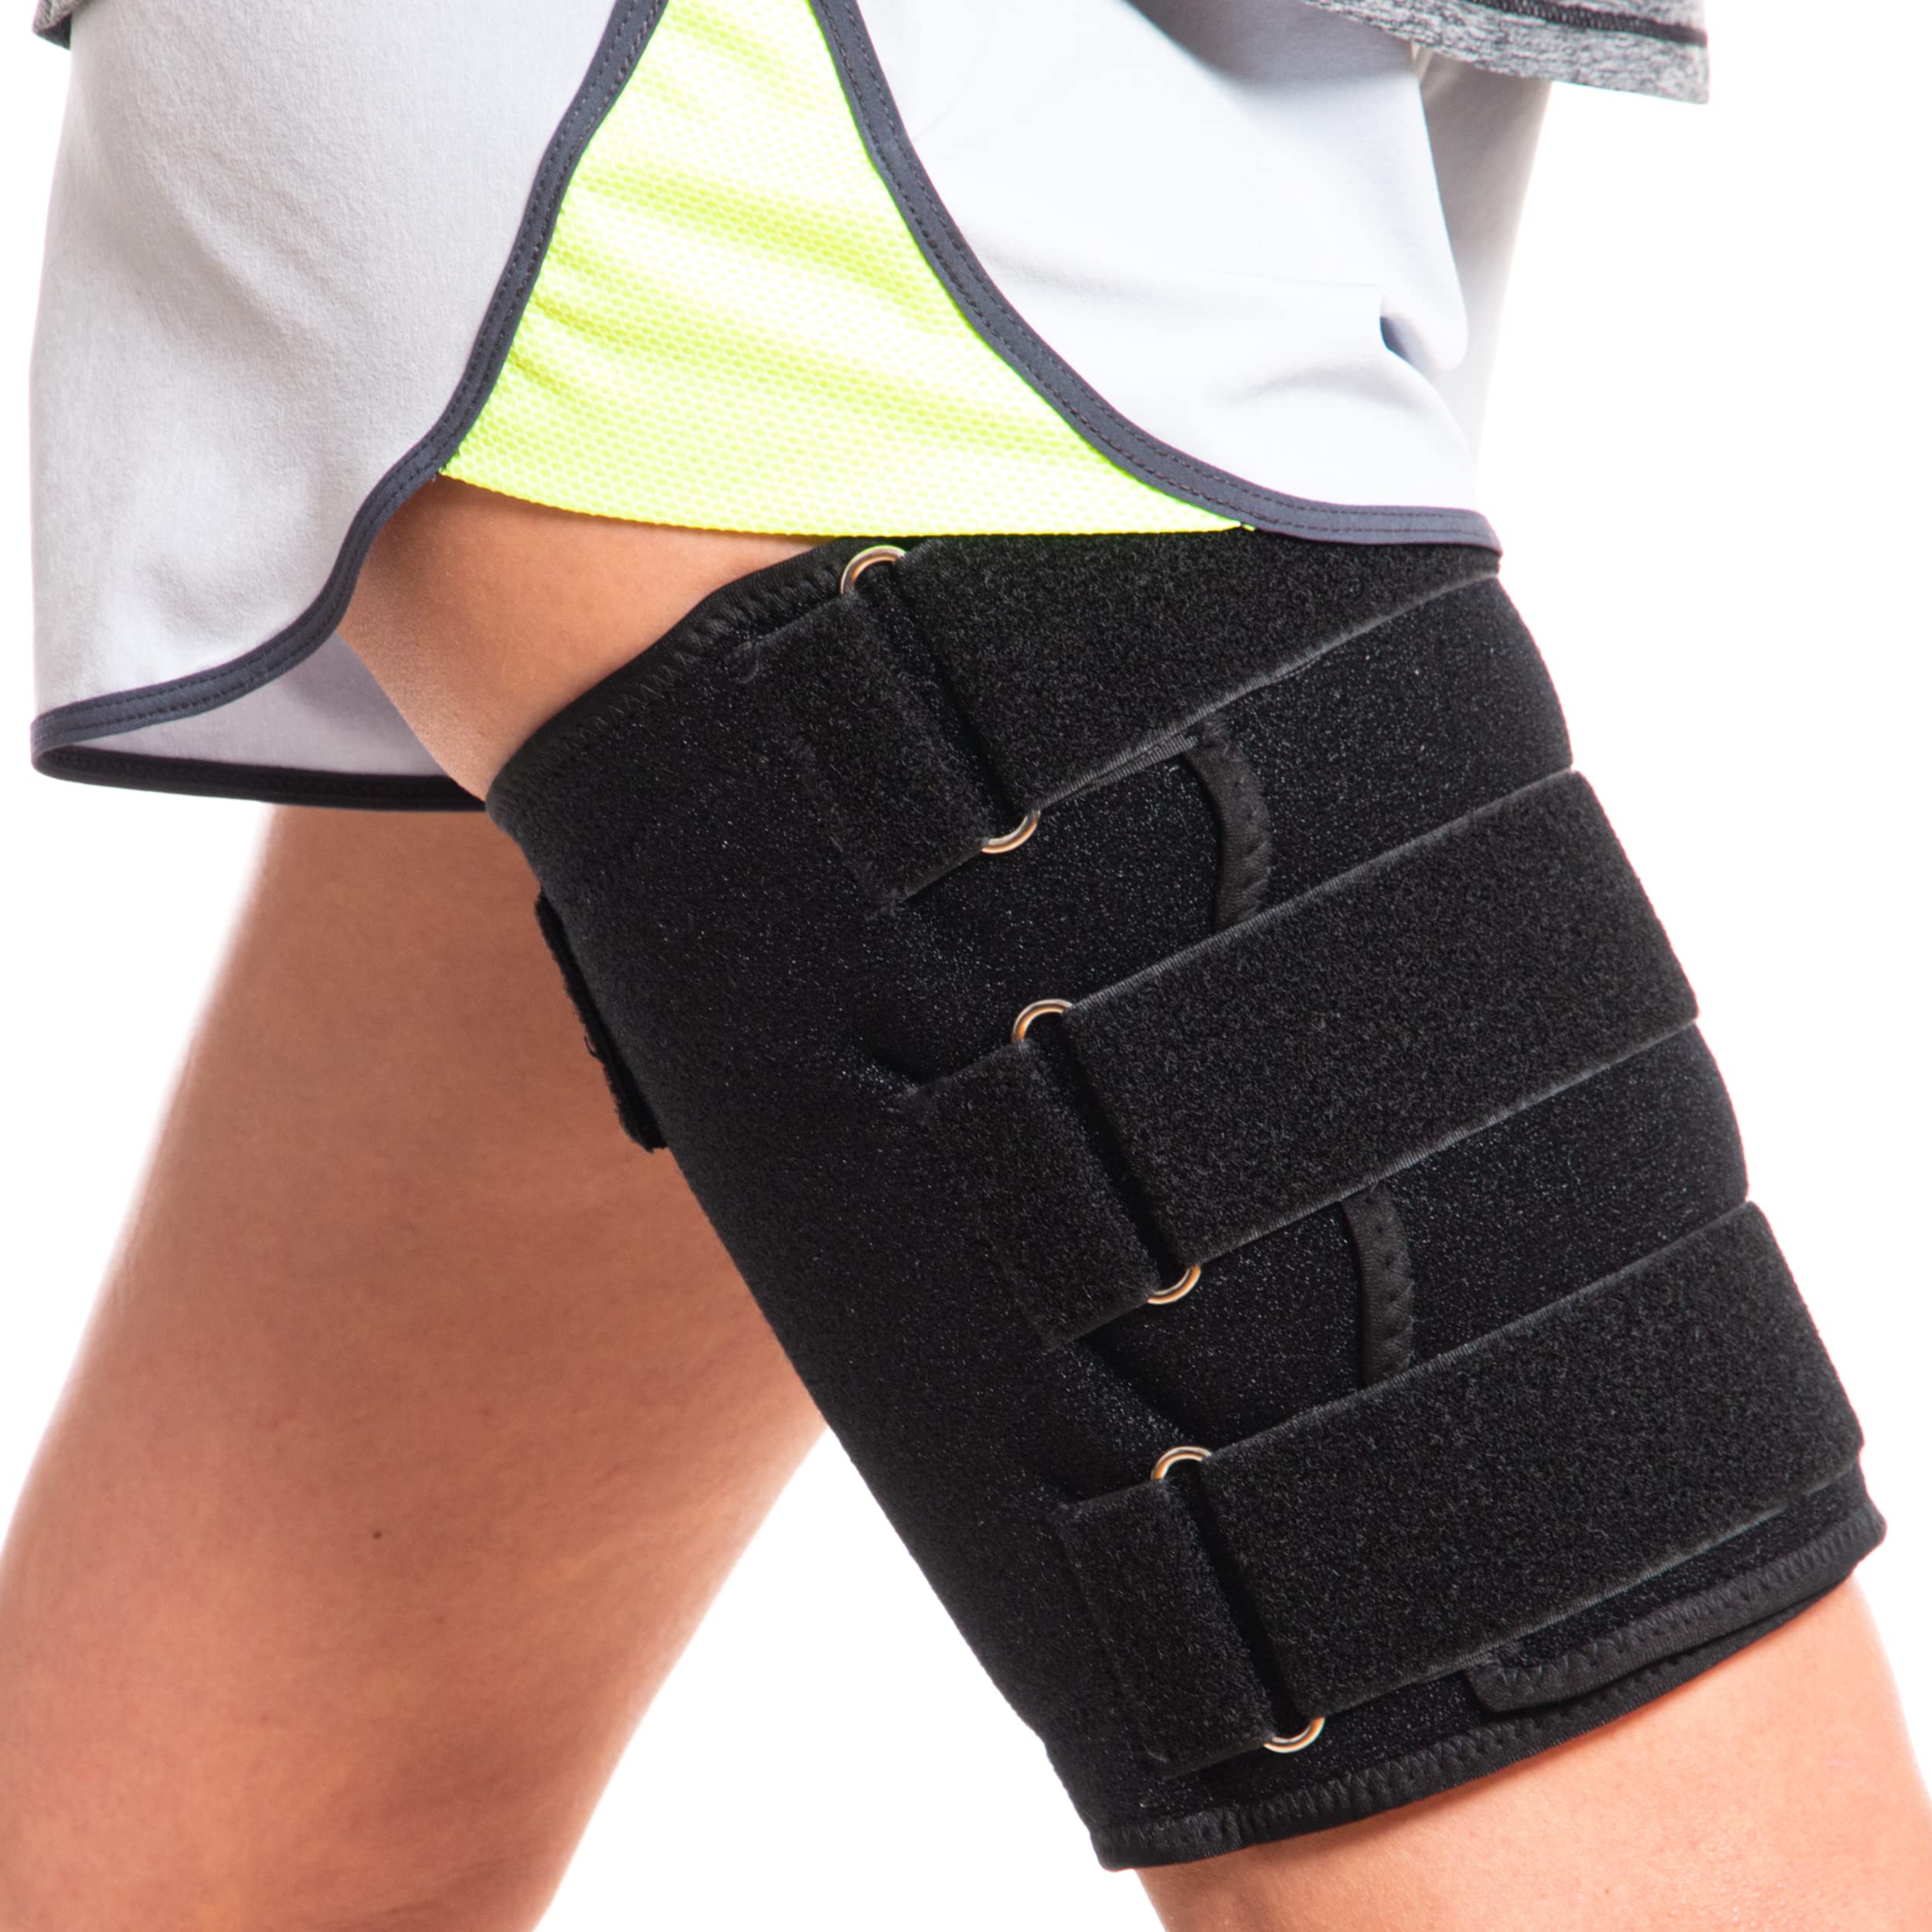 Thigh Brace Support - Adjustable Compression Hamstring Quad Wraps – IT Band  Upper Leg Wraps for Leg Sprains, Knee Pain, Hip, Tendonitis Injury, –